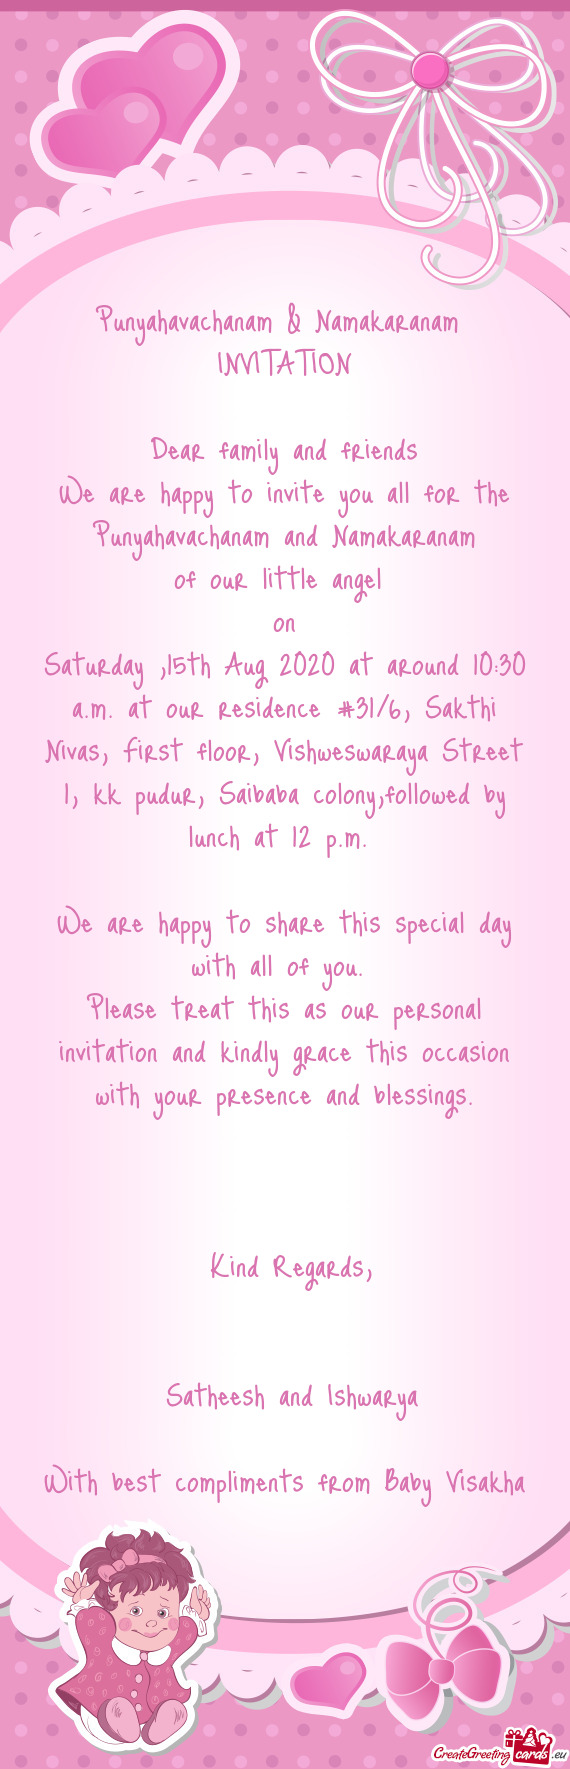 Saturday ,15th Aug 2020 at around 10:30 a.m. at our residence #31/6, Sakthi Nivas, First floor, Vish